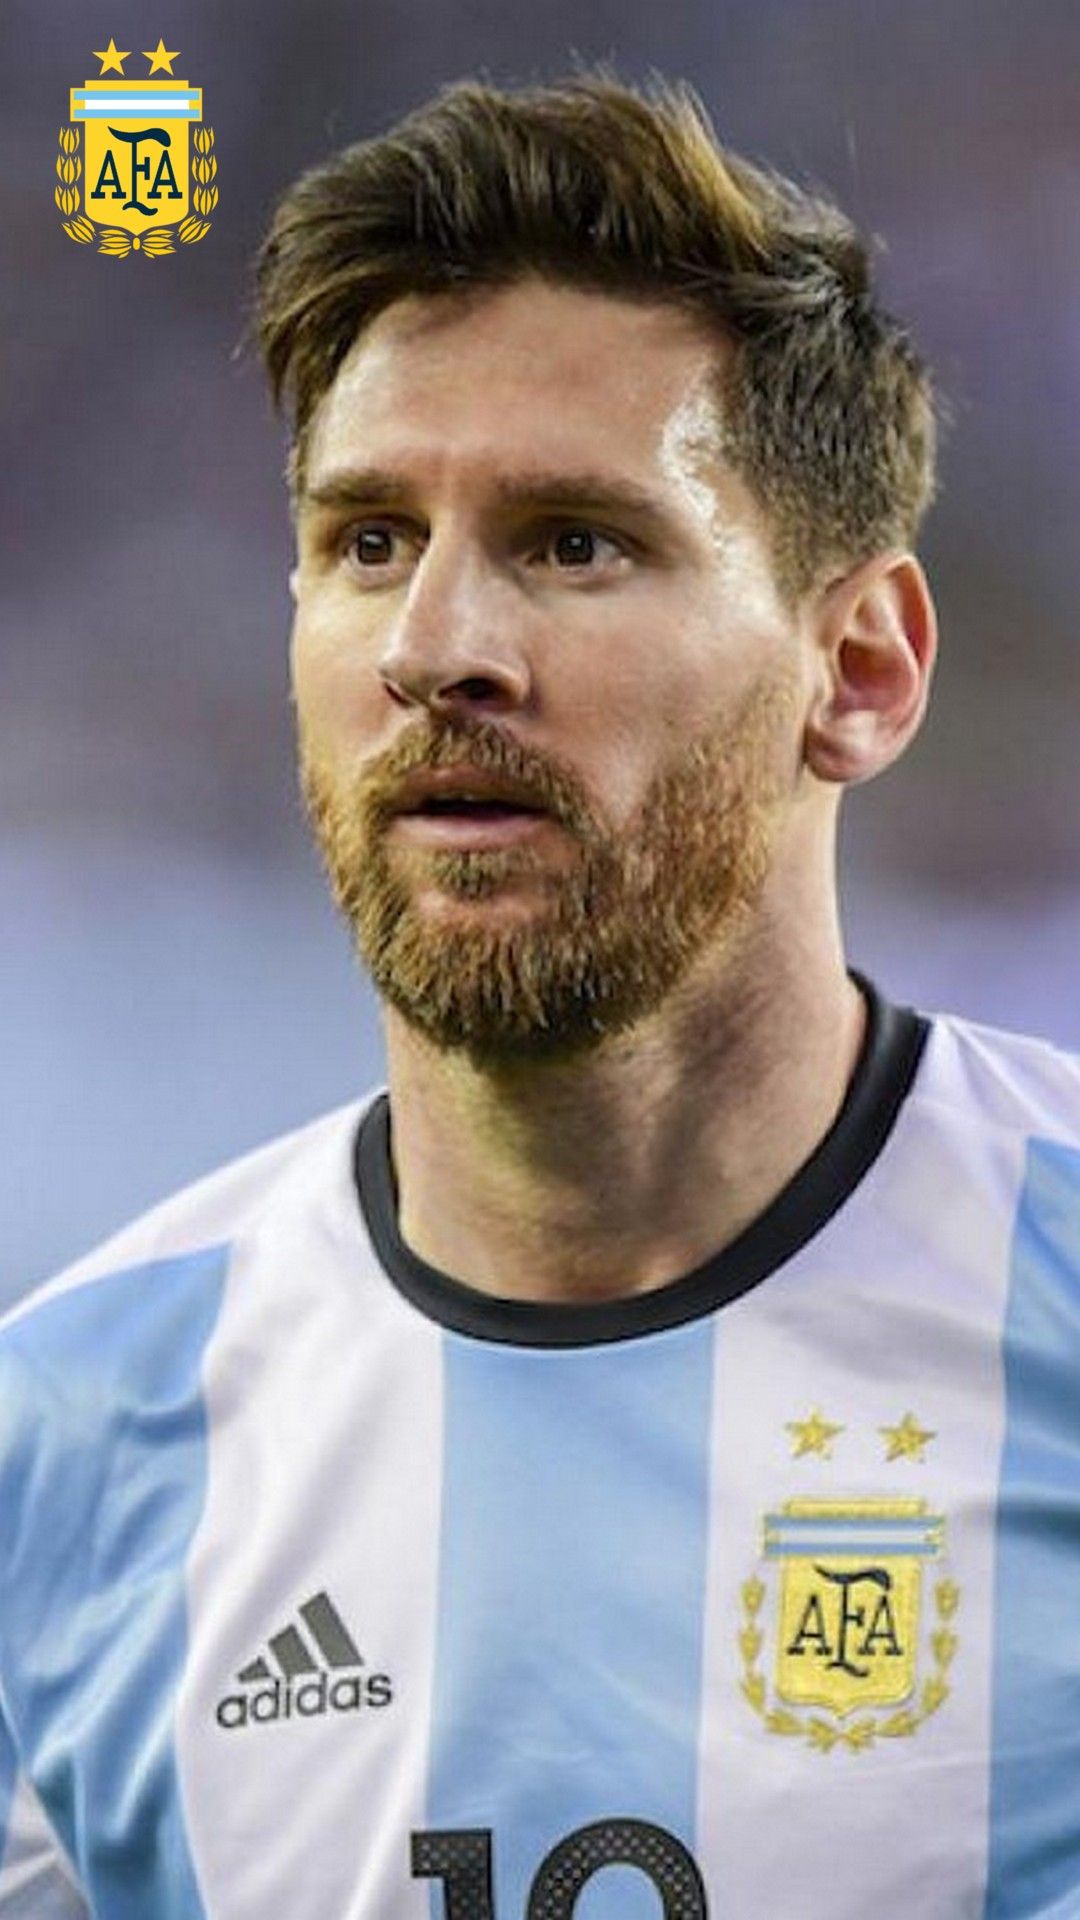 Messi 2020 iPhone Wallpaper. Messi, Wallpaper, iPhone wallpaper